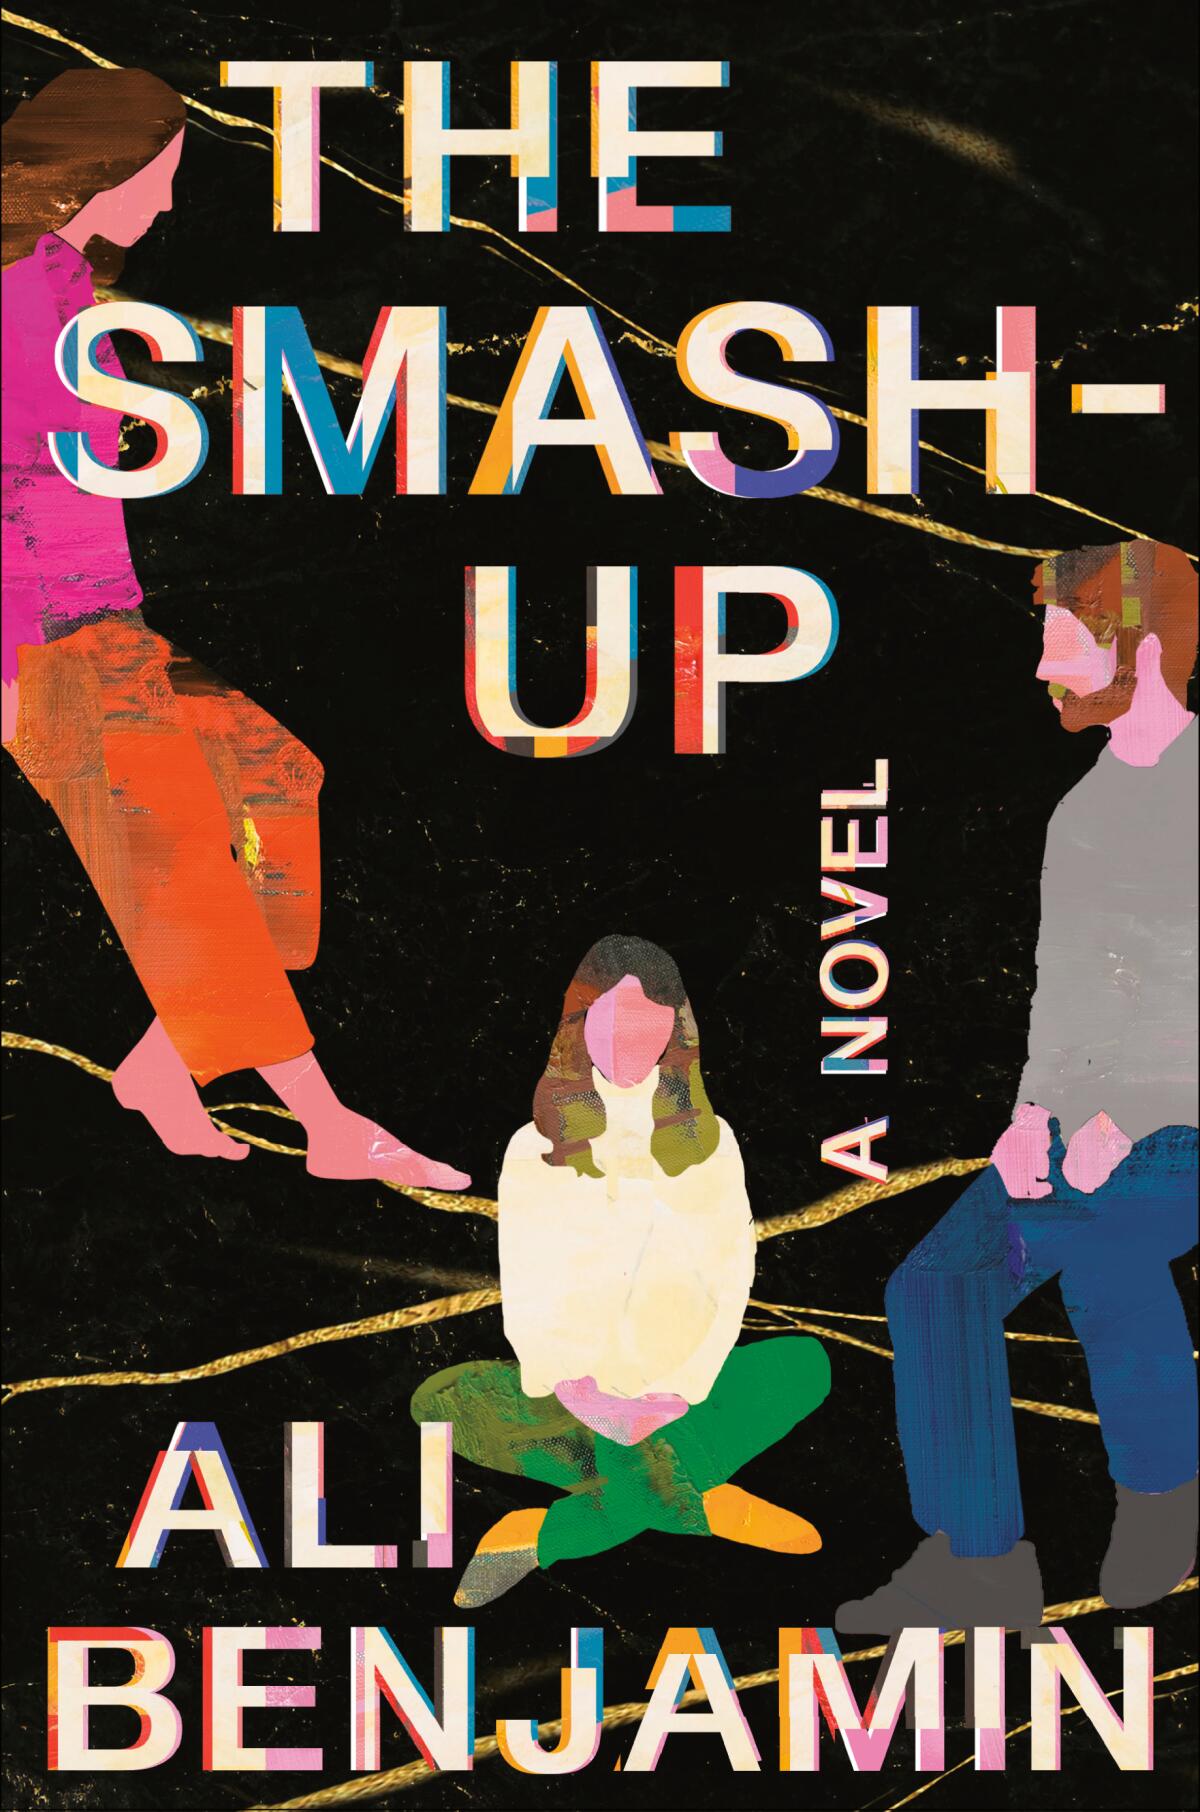 Book jacket for Ali Benjamin's novel "The Smash-Up"